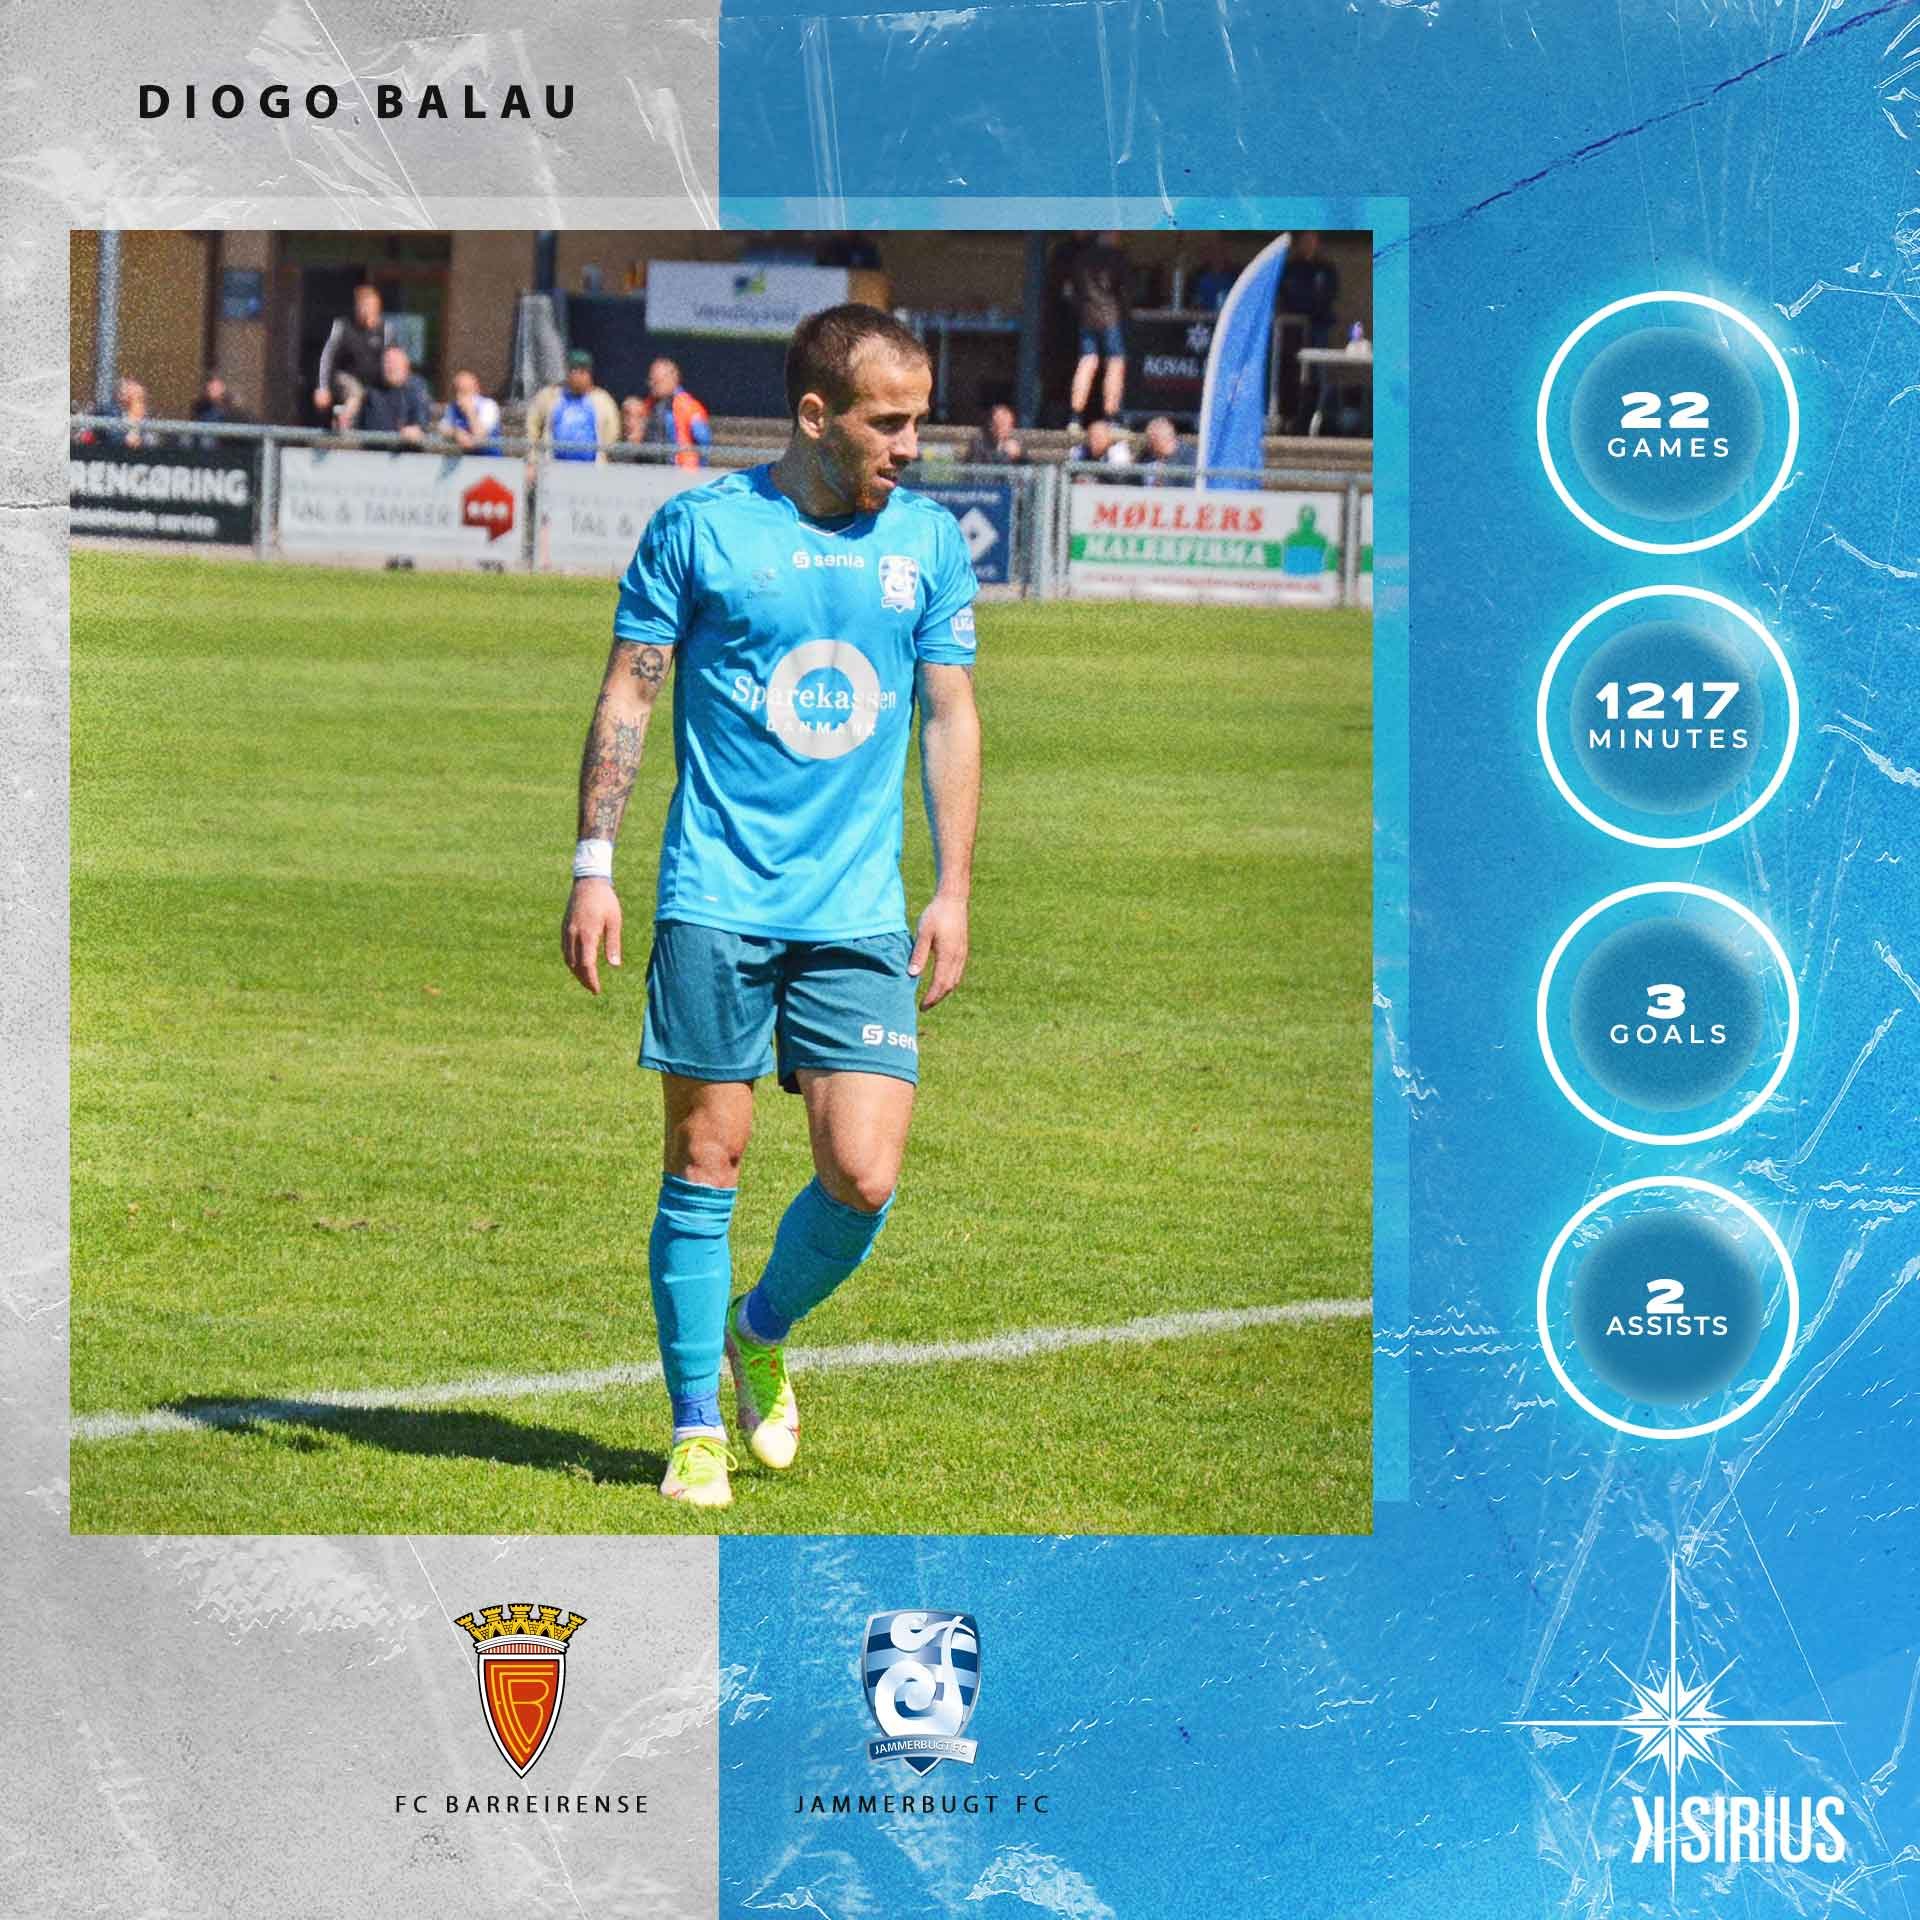 Stats: Diogo Balau (Jammerbugt FC)